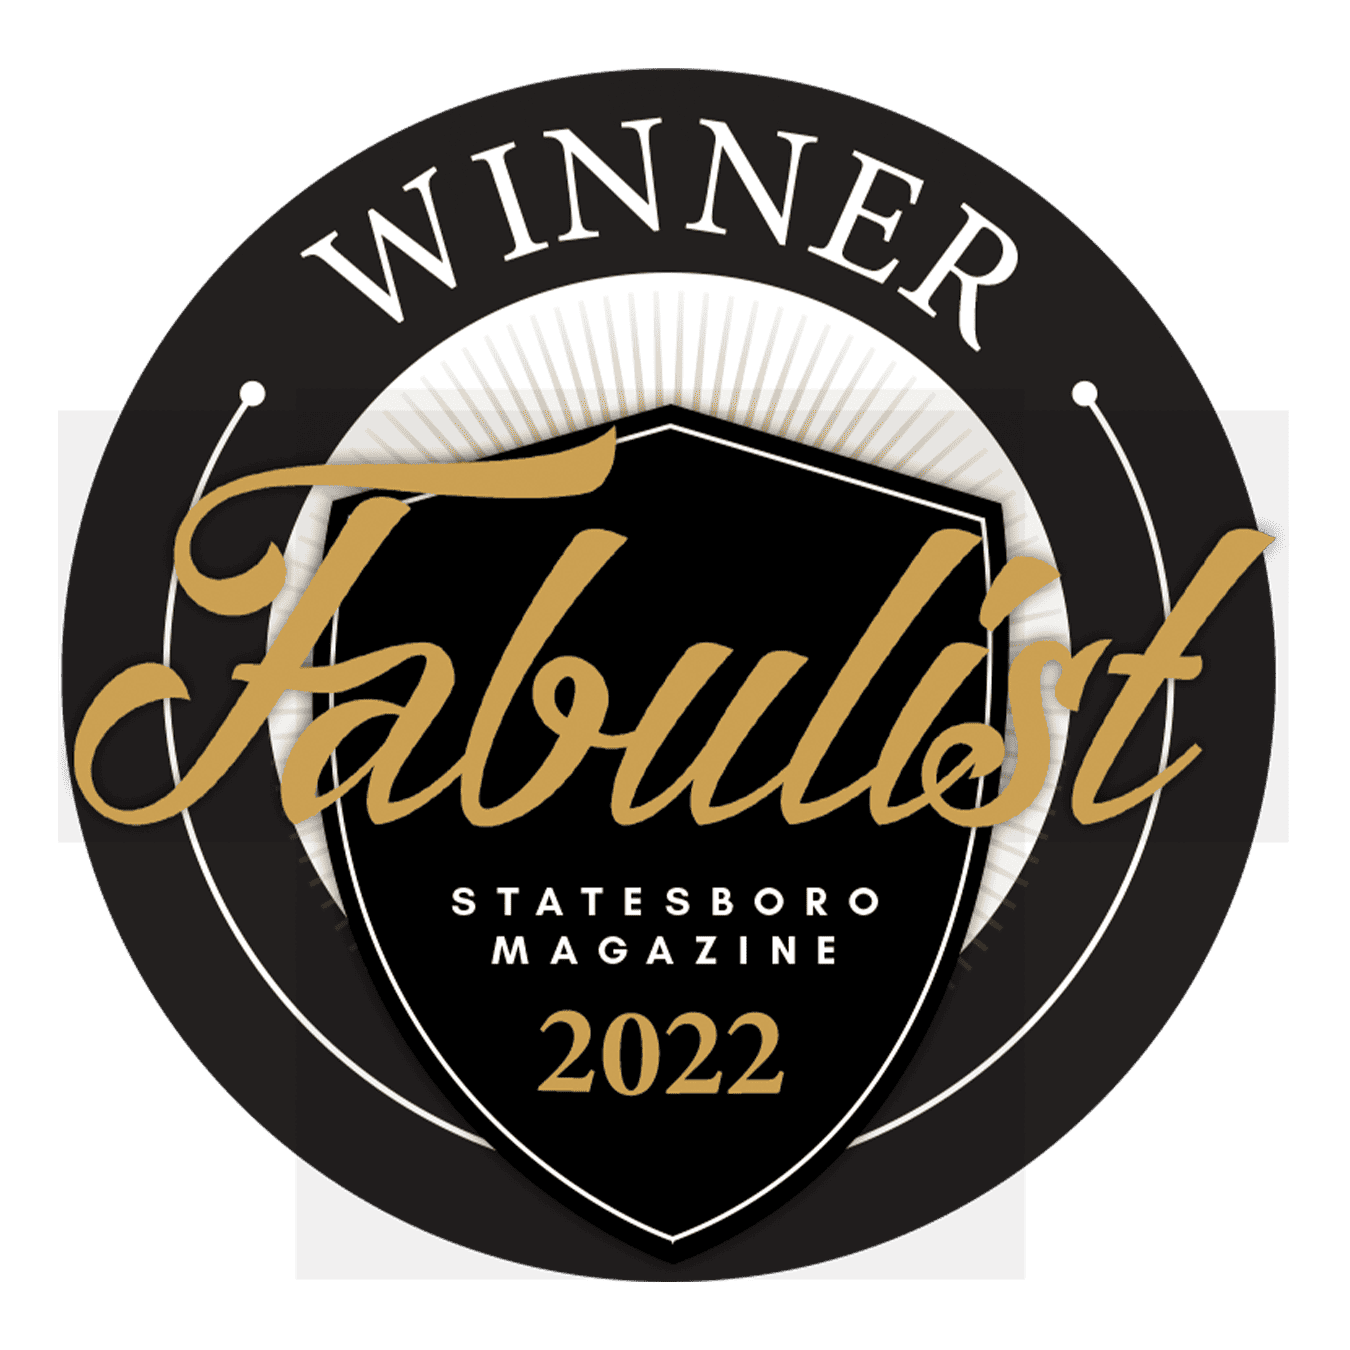 The 2022 winners of the Fabulist Statesboro Magazine logo is featured.